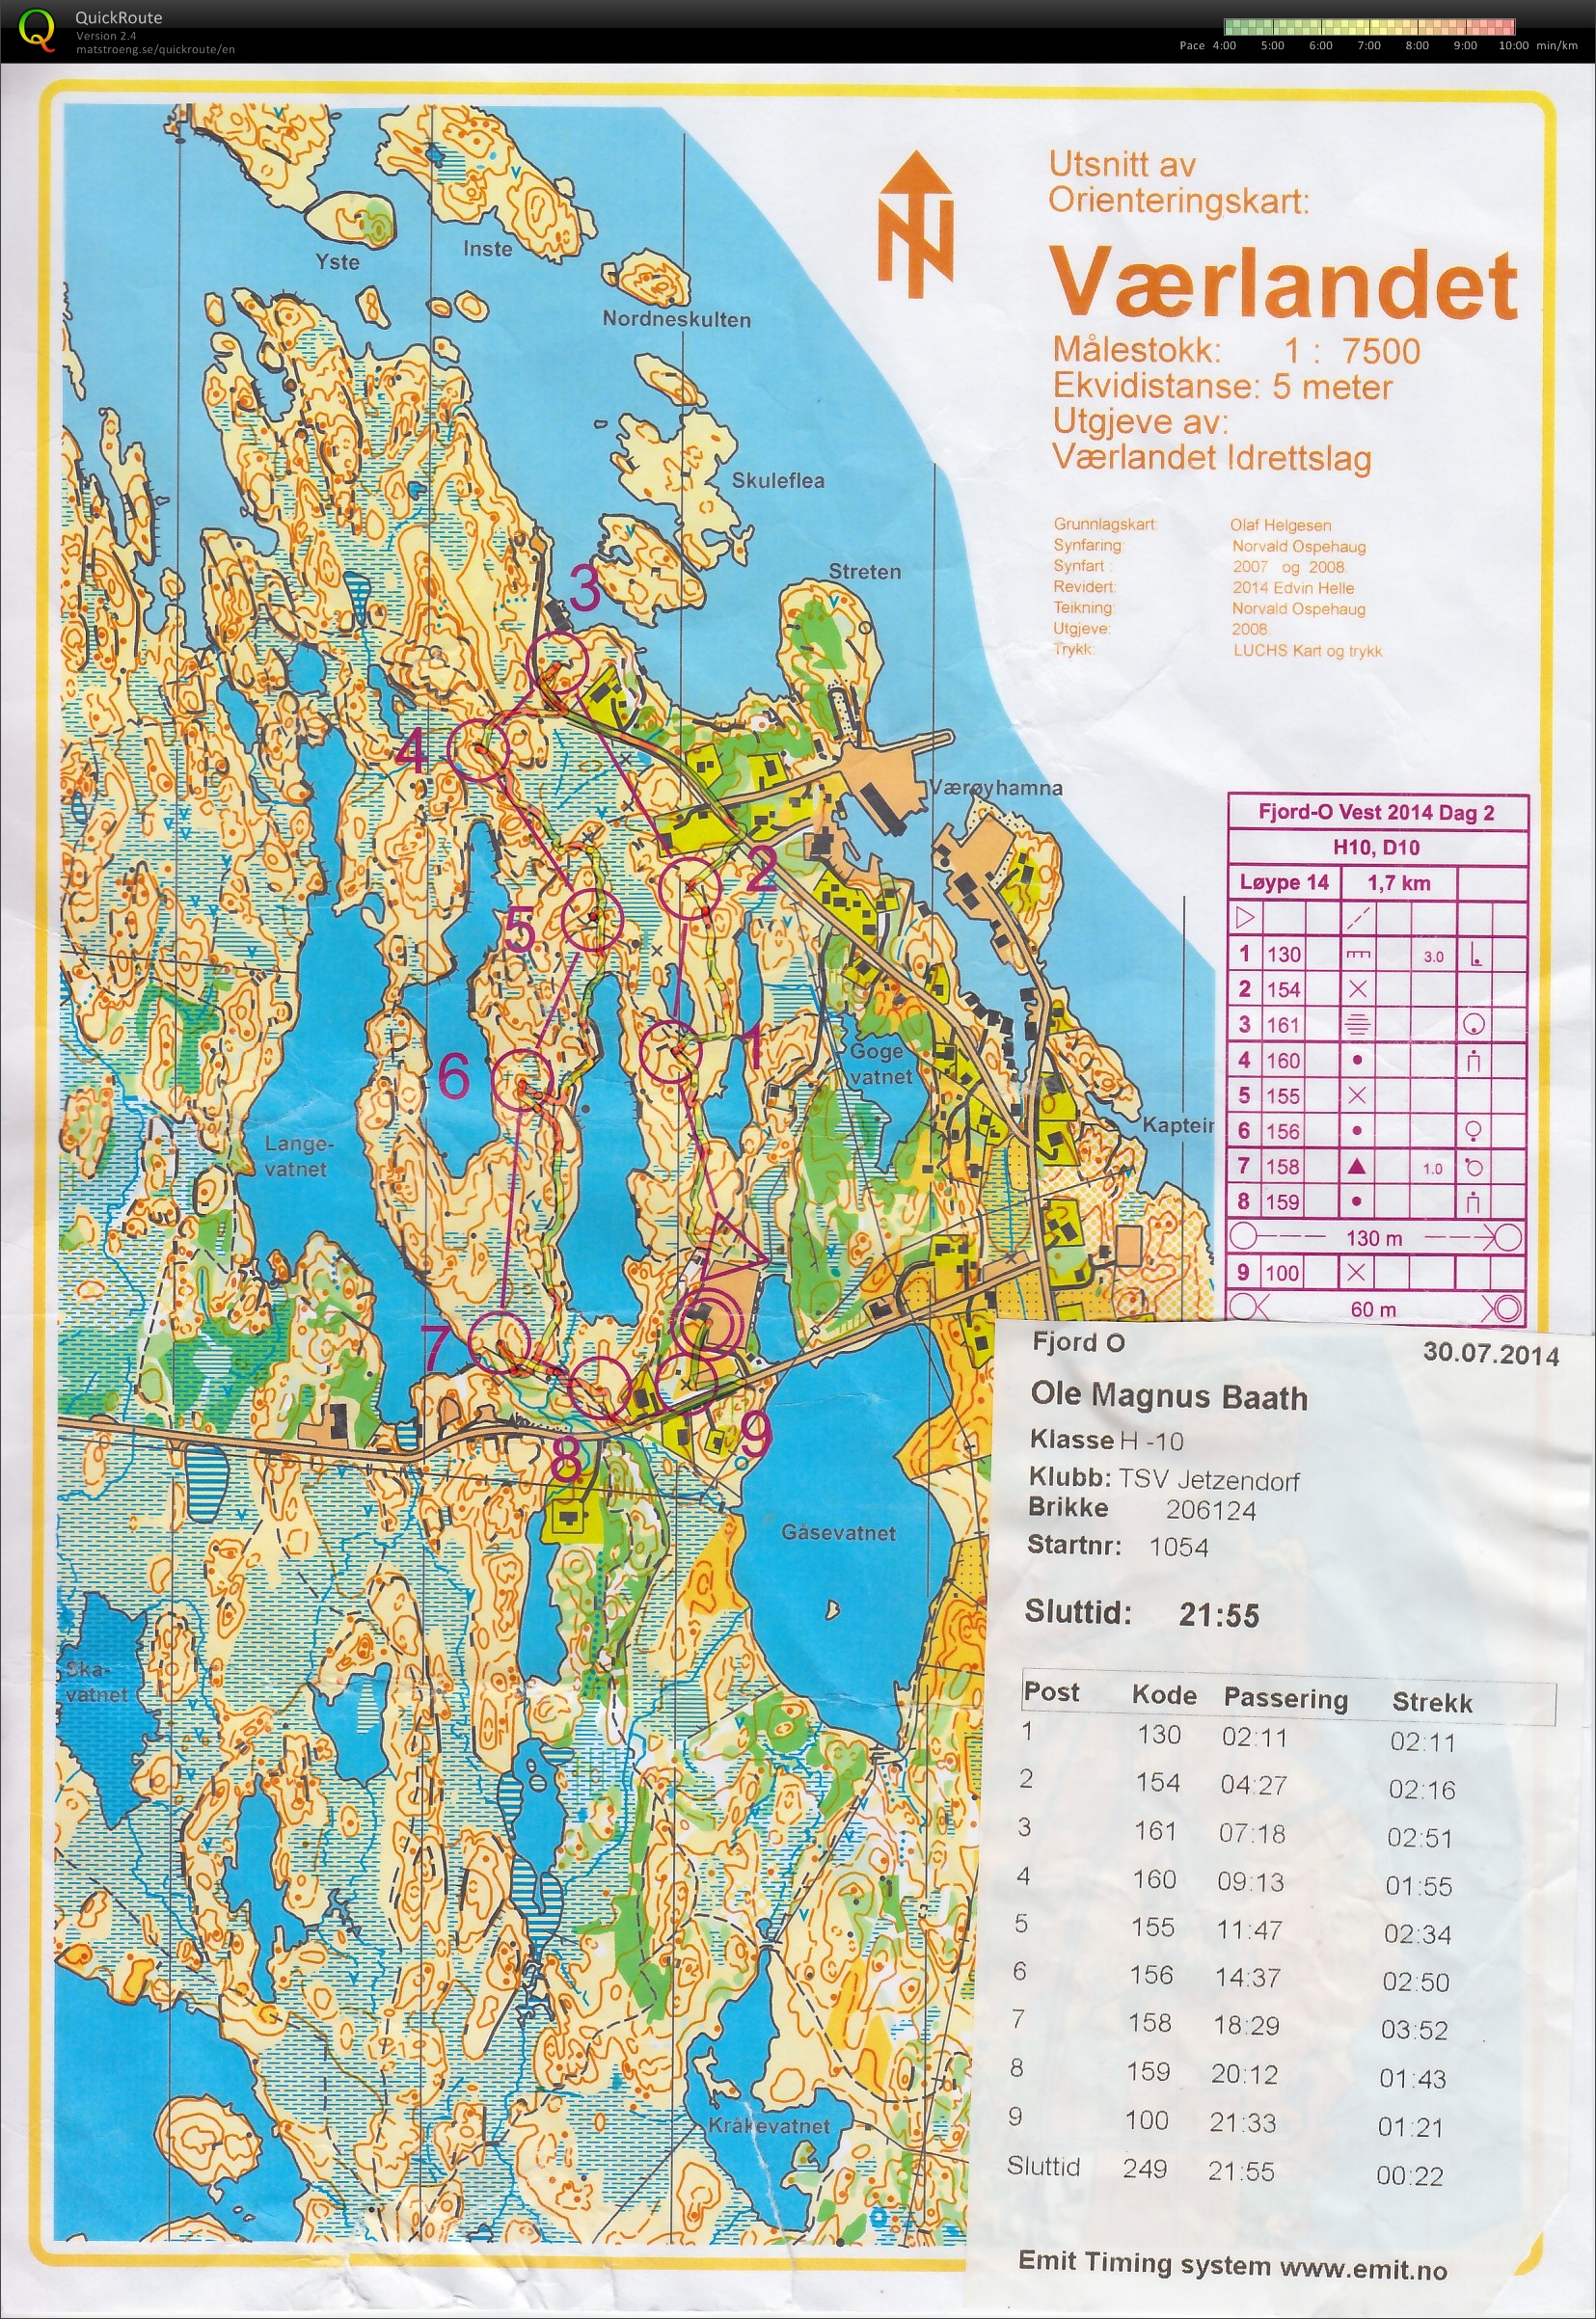 Fjord-O Vest 2014 Etappe 2 (31-07-2014)